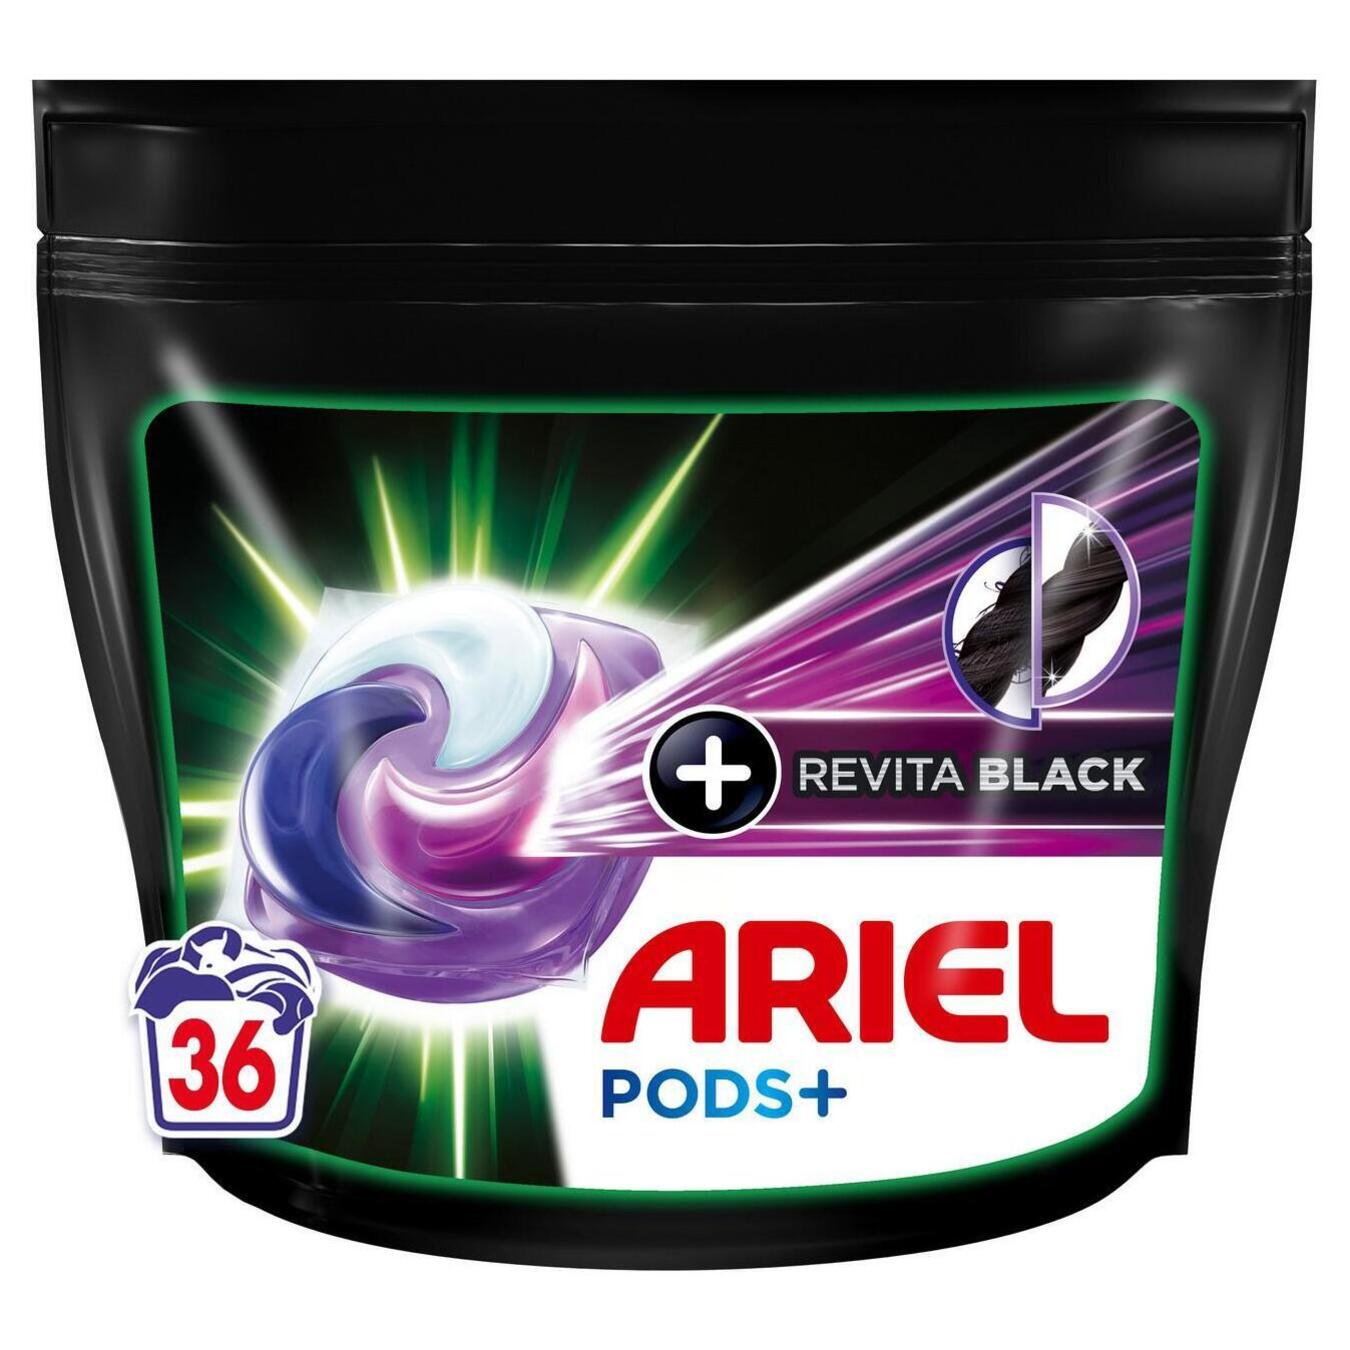 Capsules for washing Ariel Revita Black 21.3g*36 pcs